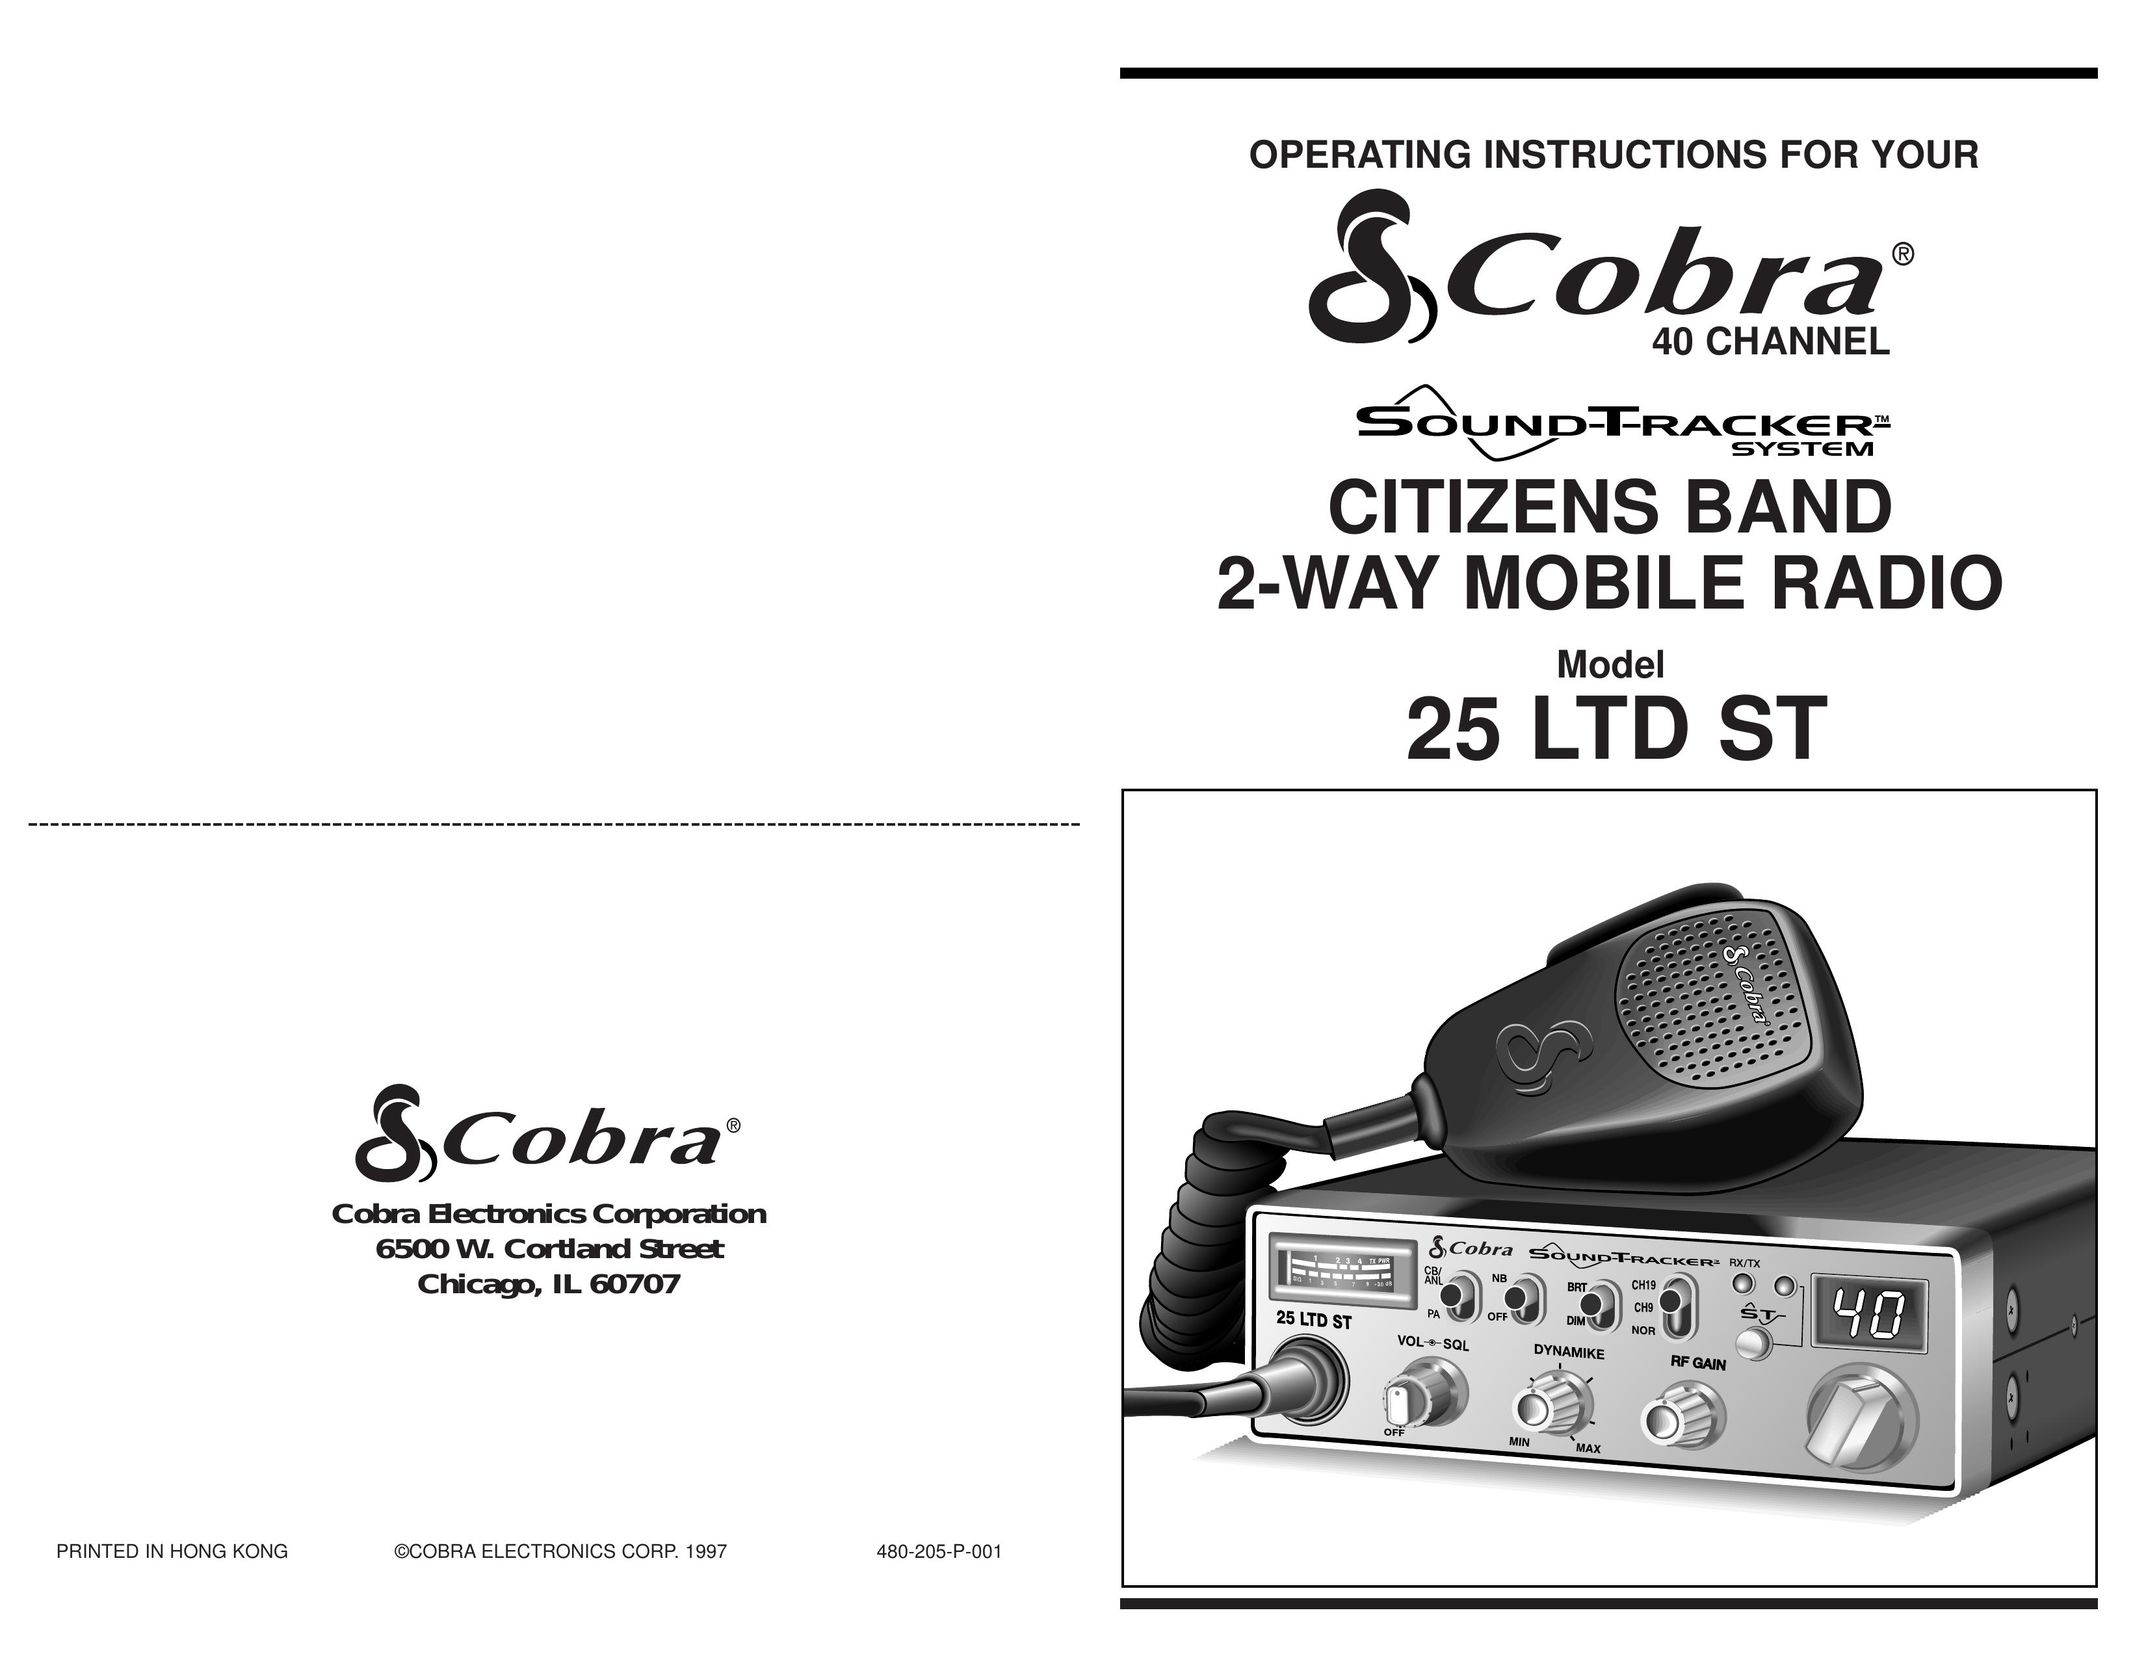 Cobra Electronics 25 LTD ST Two-Way Radio User Manual